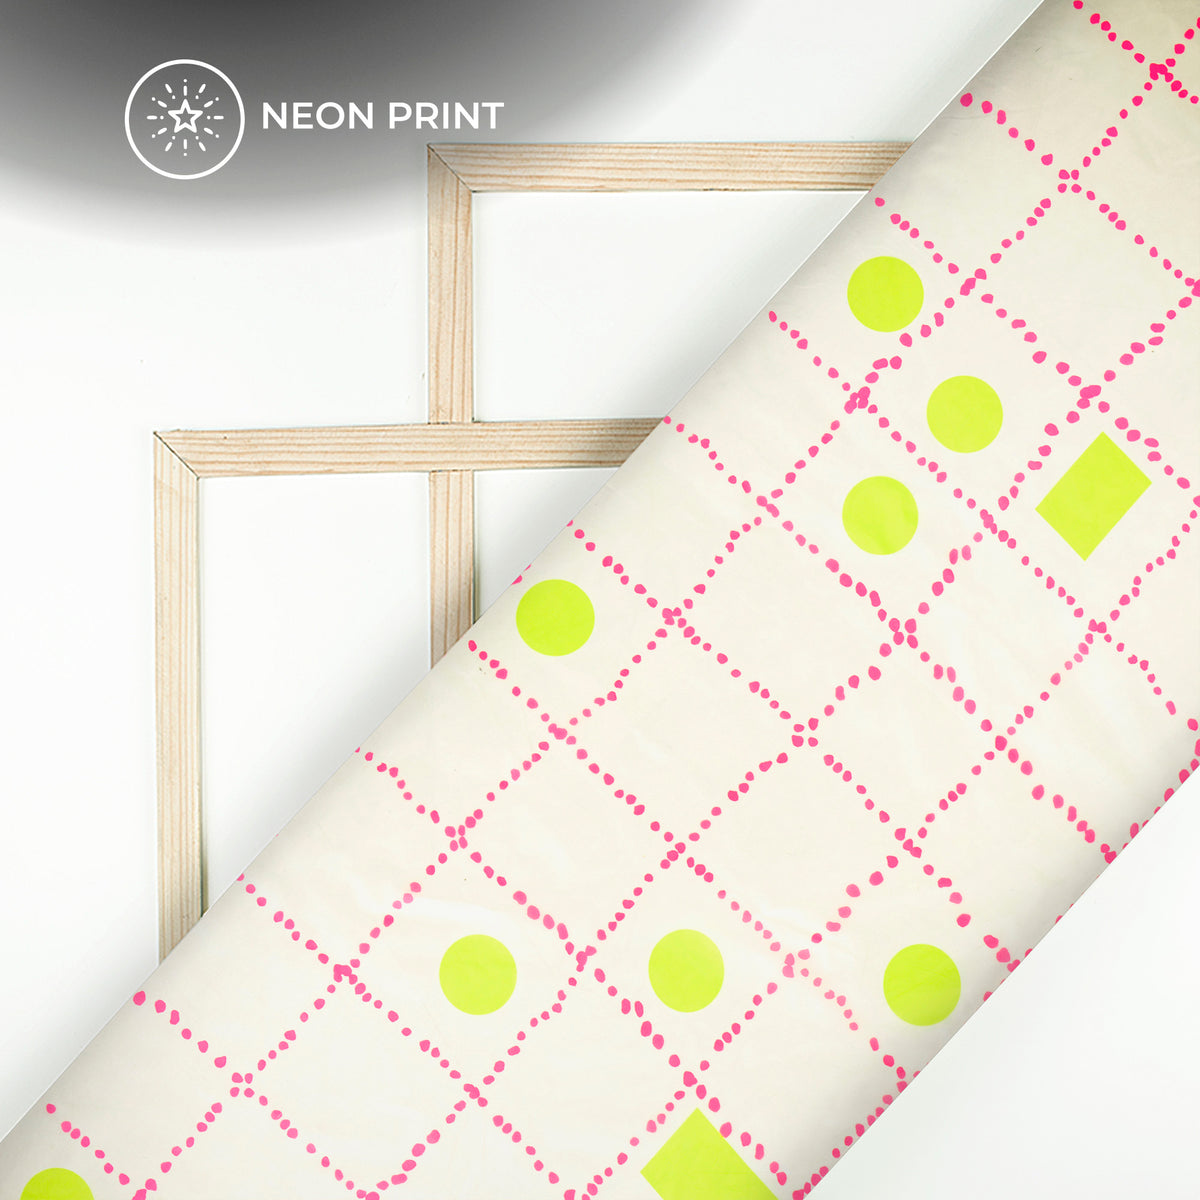 Neon Luxe: Opulent Digital Print Organza Satin Fabric